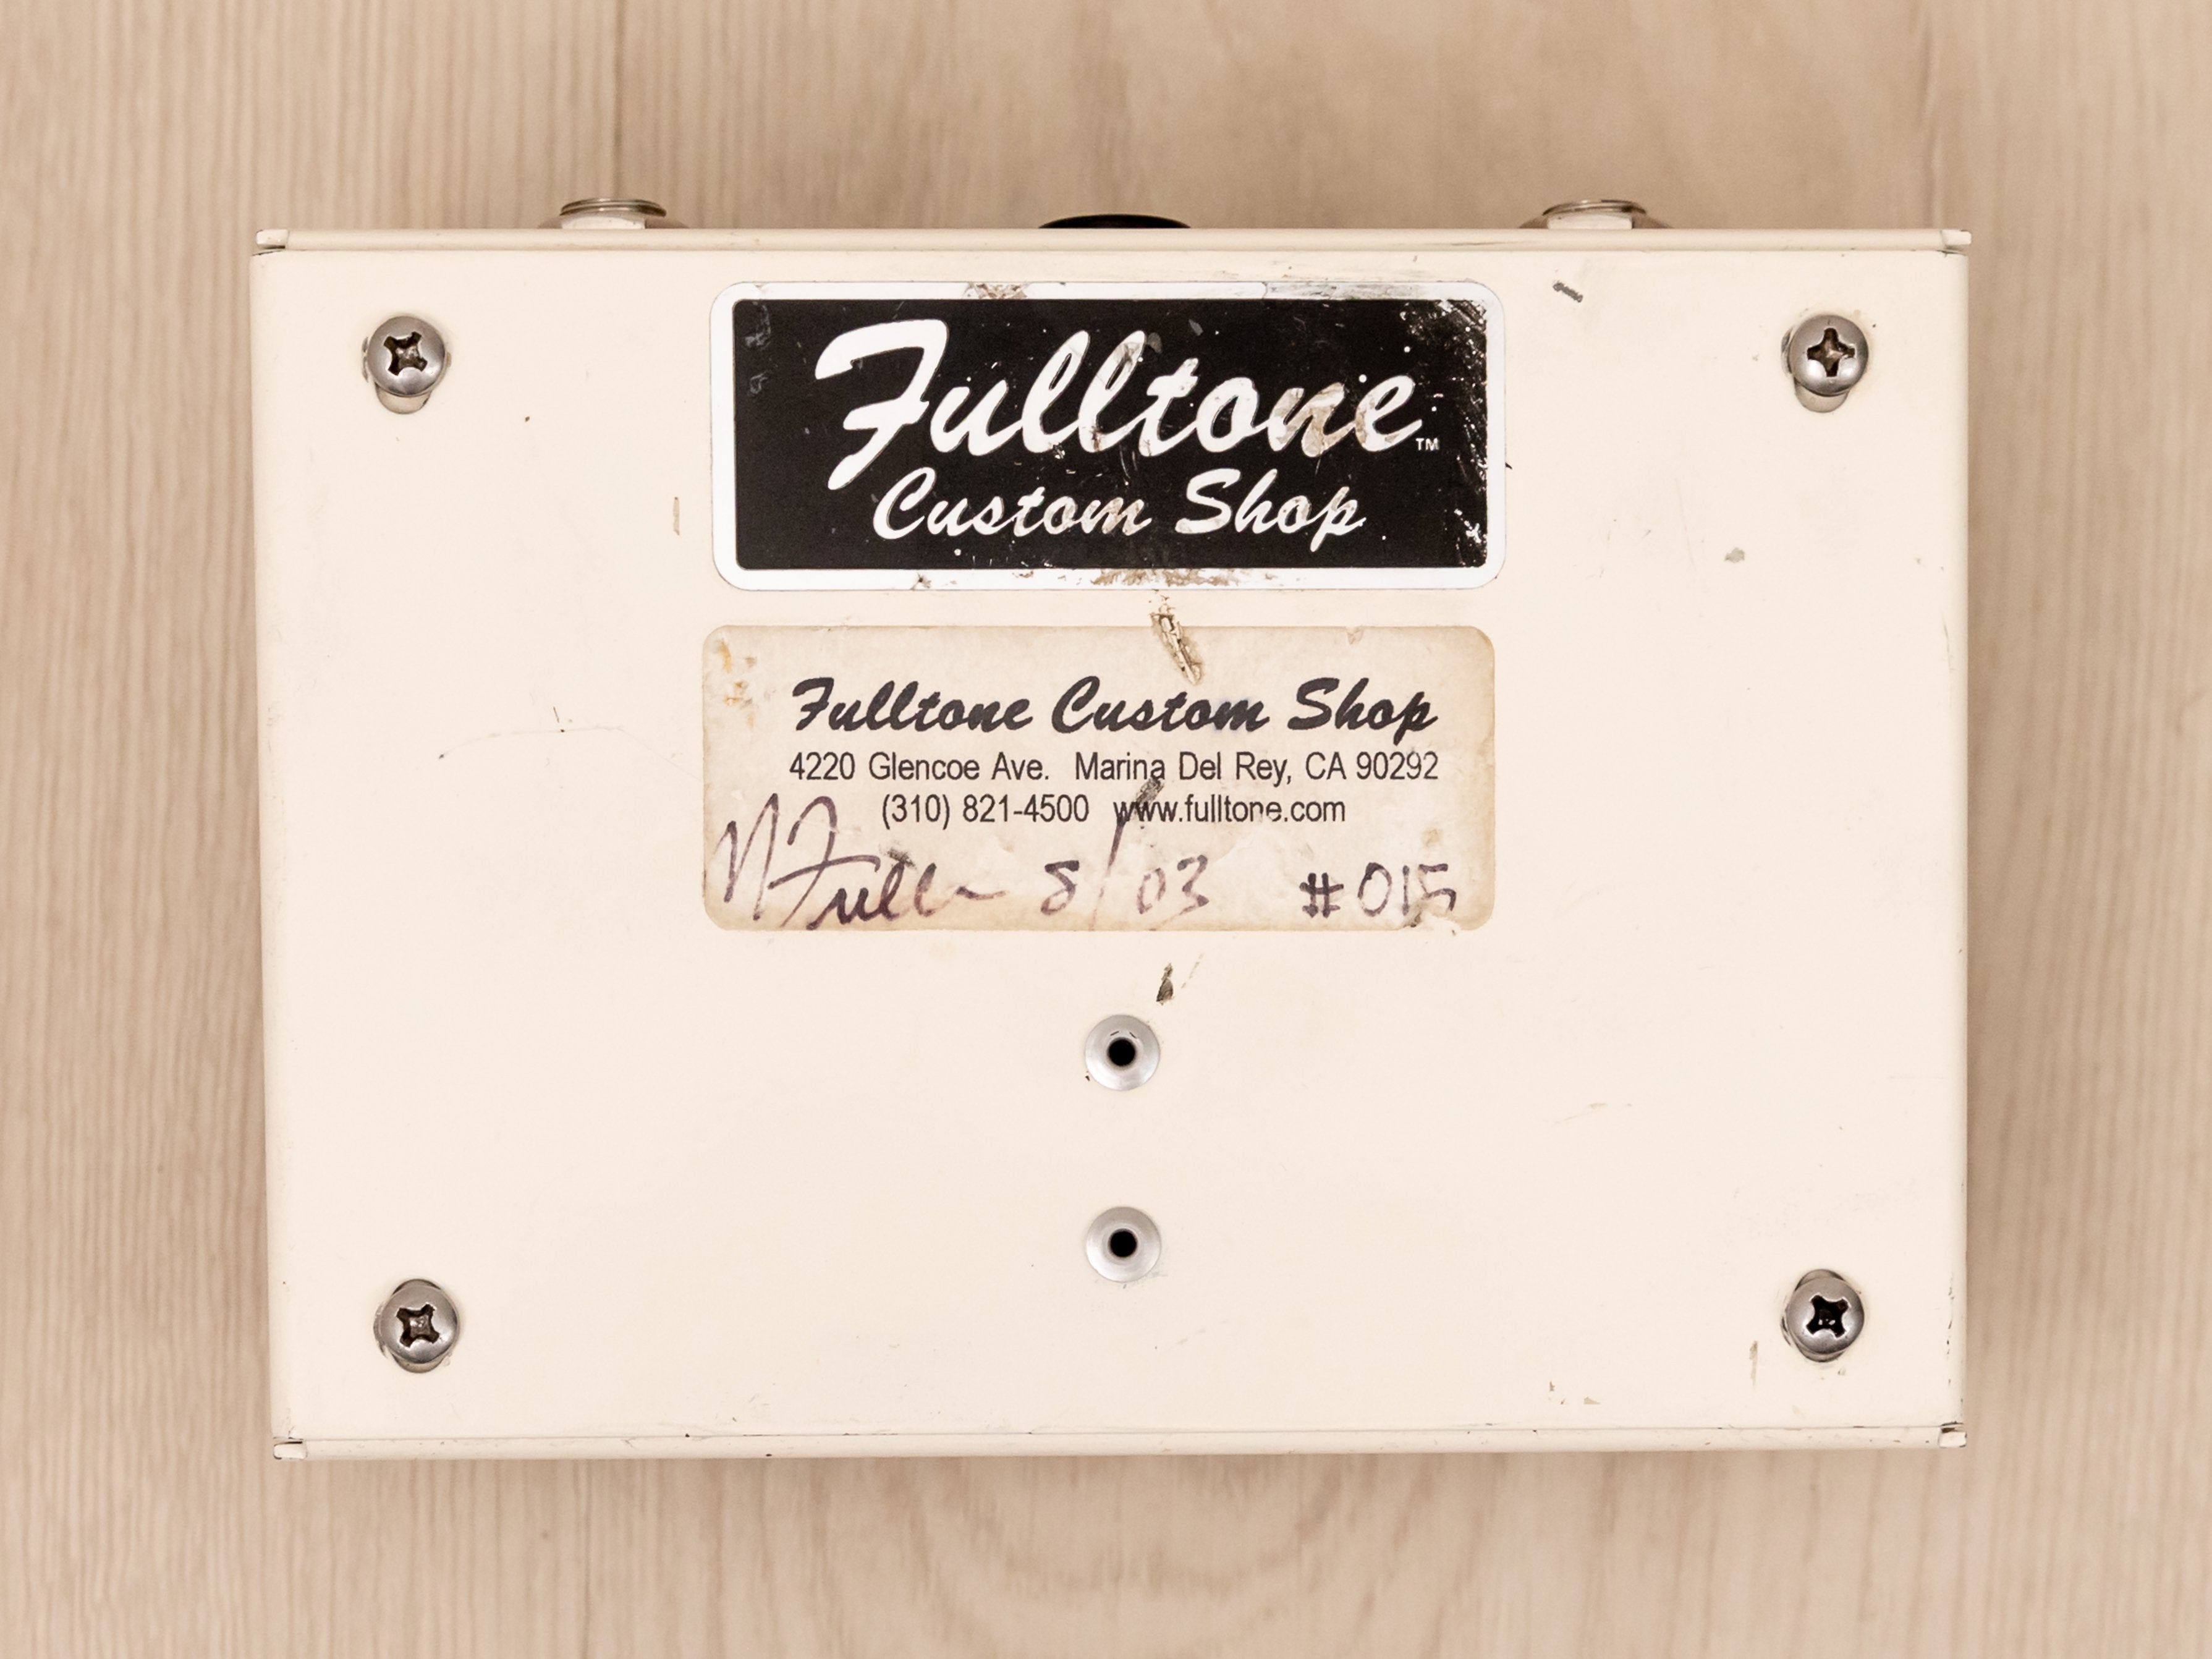 2003 Fulltone Custom Shop Fulldrive 2 Boutique Guitar Effects Pedal Cream w/ Box, Manual